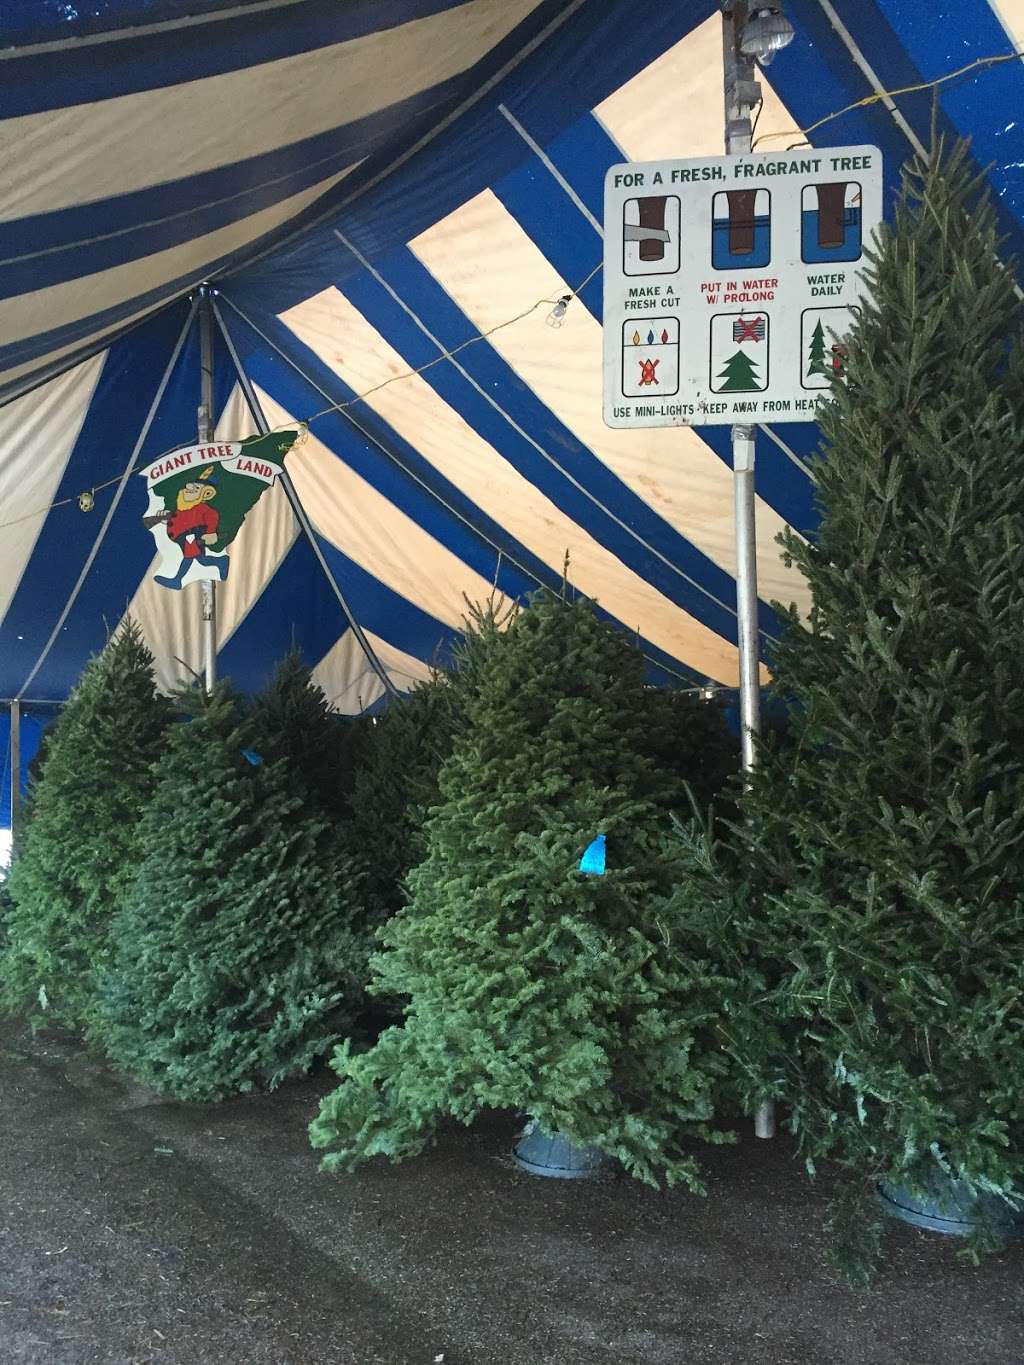 Tree Towne Christmas Trees | 181 S Military Trail, West Palm Beach, FL 33415 | Phone: (561) 370-9126